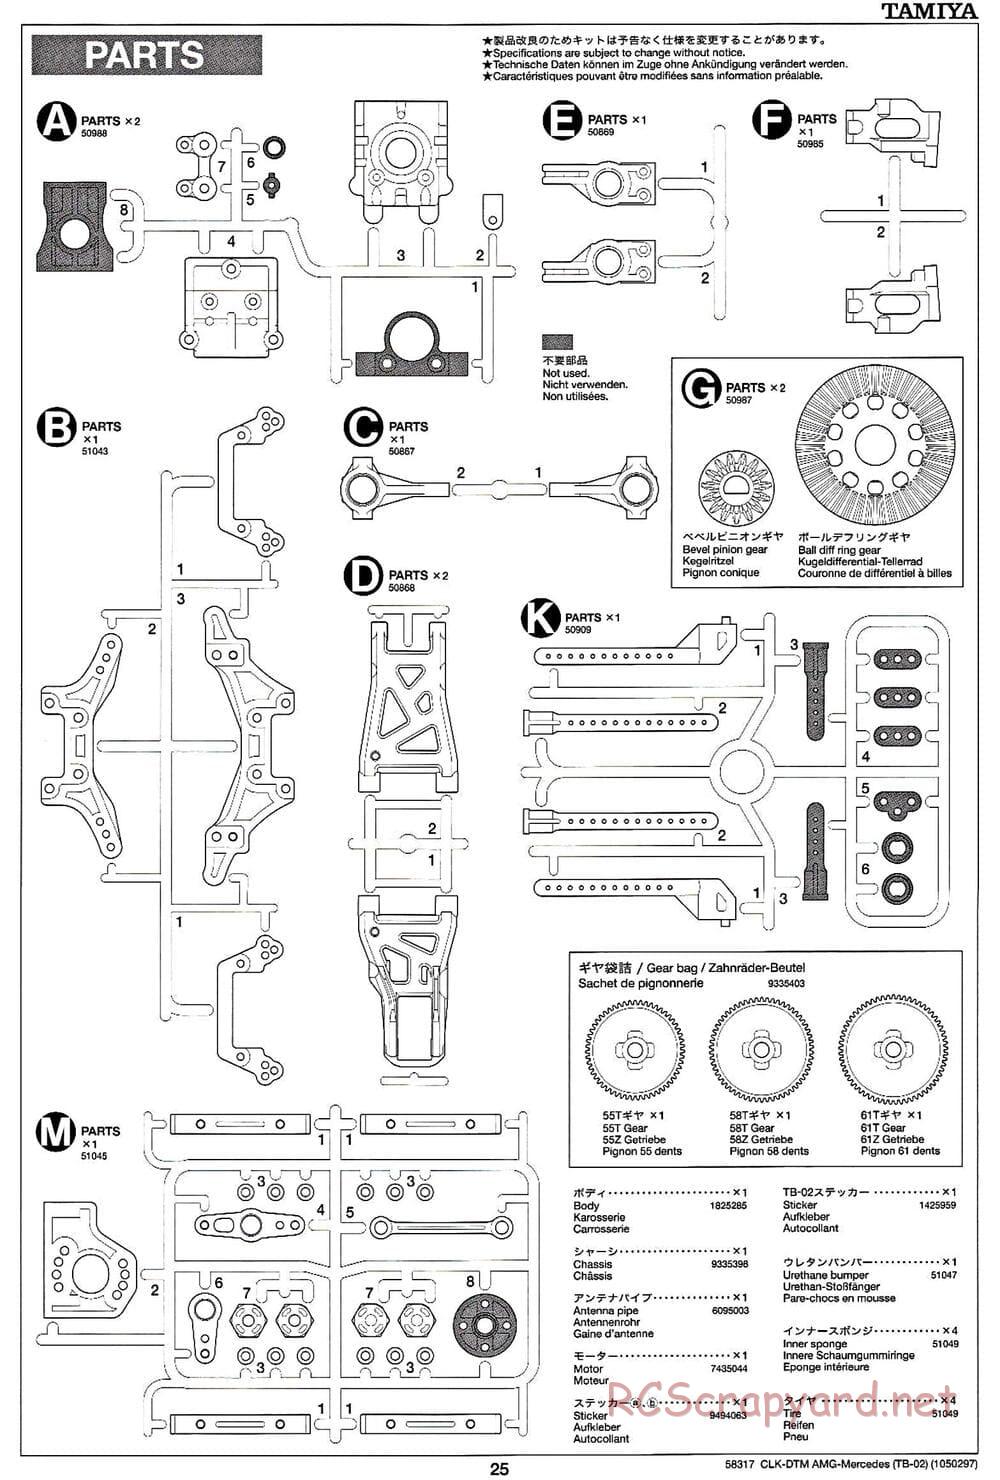 Tamiya - CLK DTM 2002 AMG Mercedes - TB-02 Chassis - Manual - Page 25